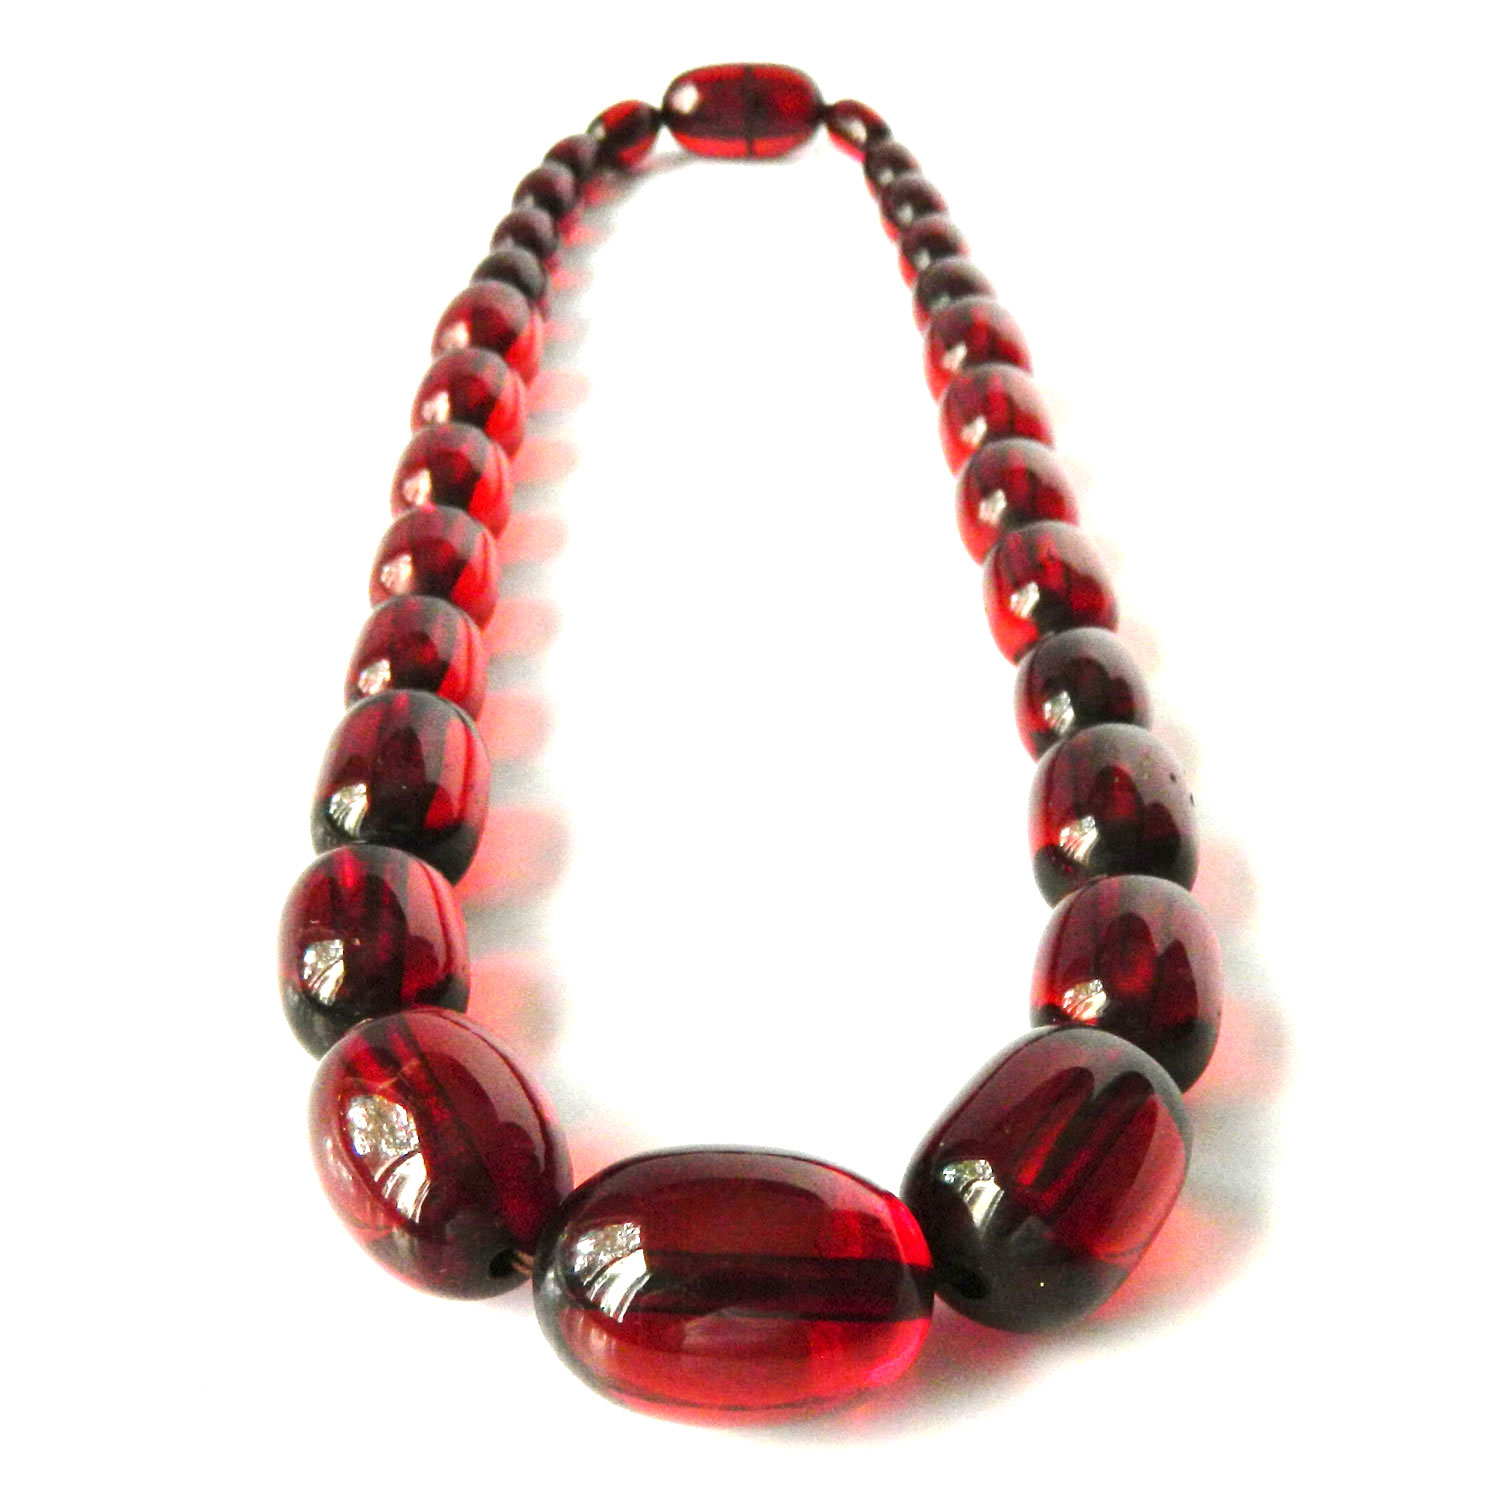 Cherry amber bead necklace